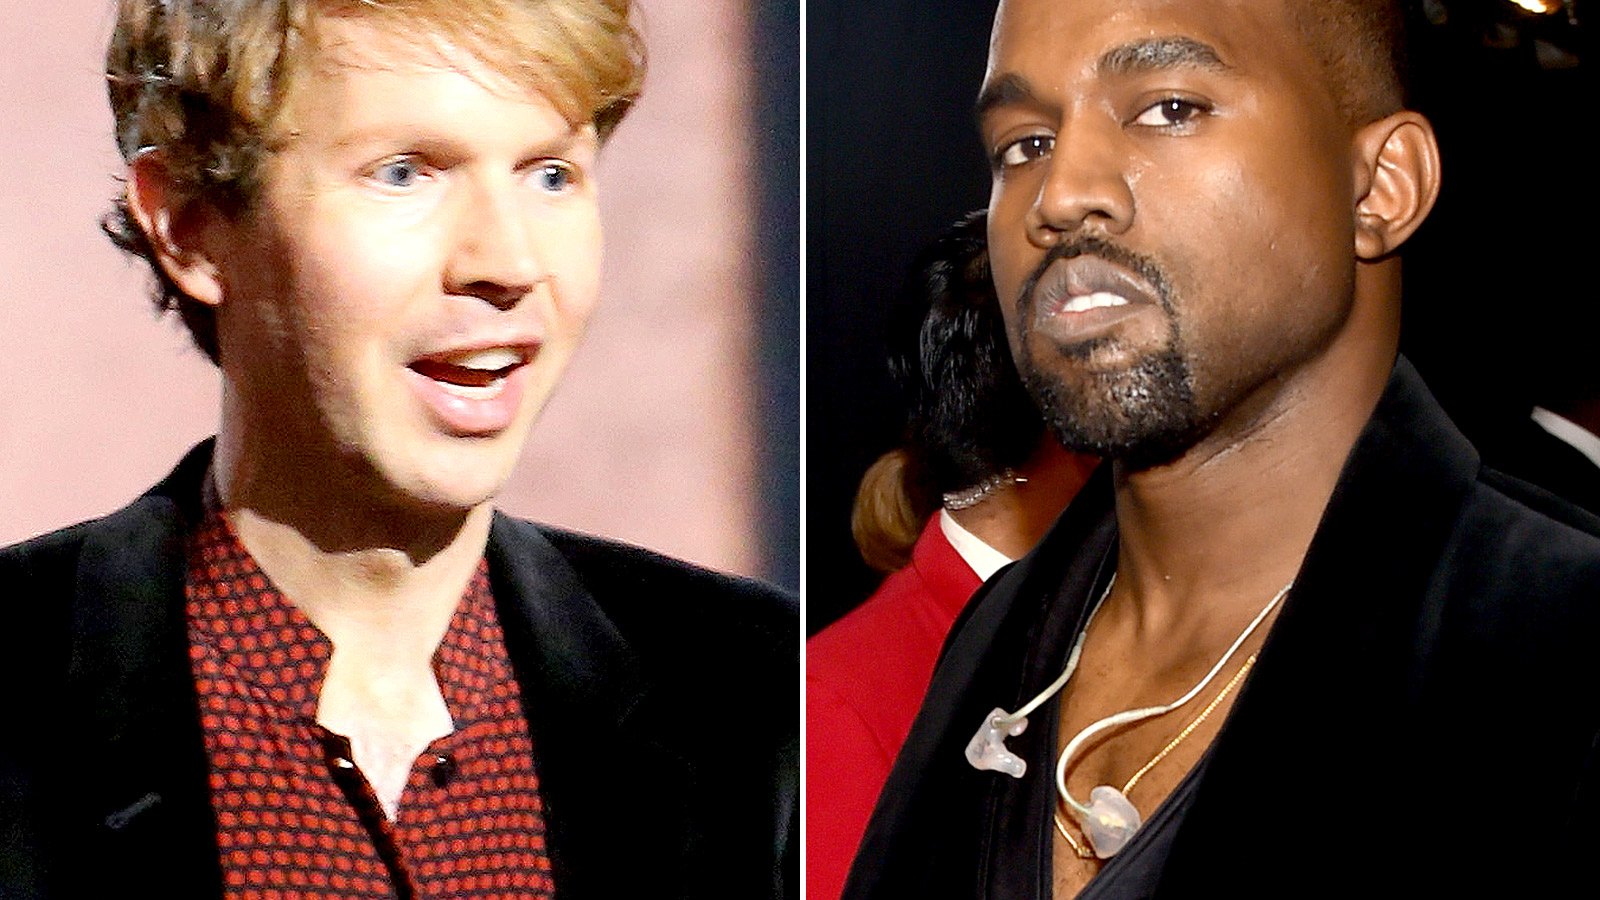 Beck has no hard feelings towards Kanye West following his Grammys dis